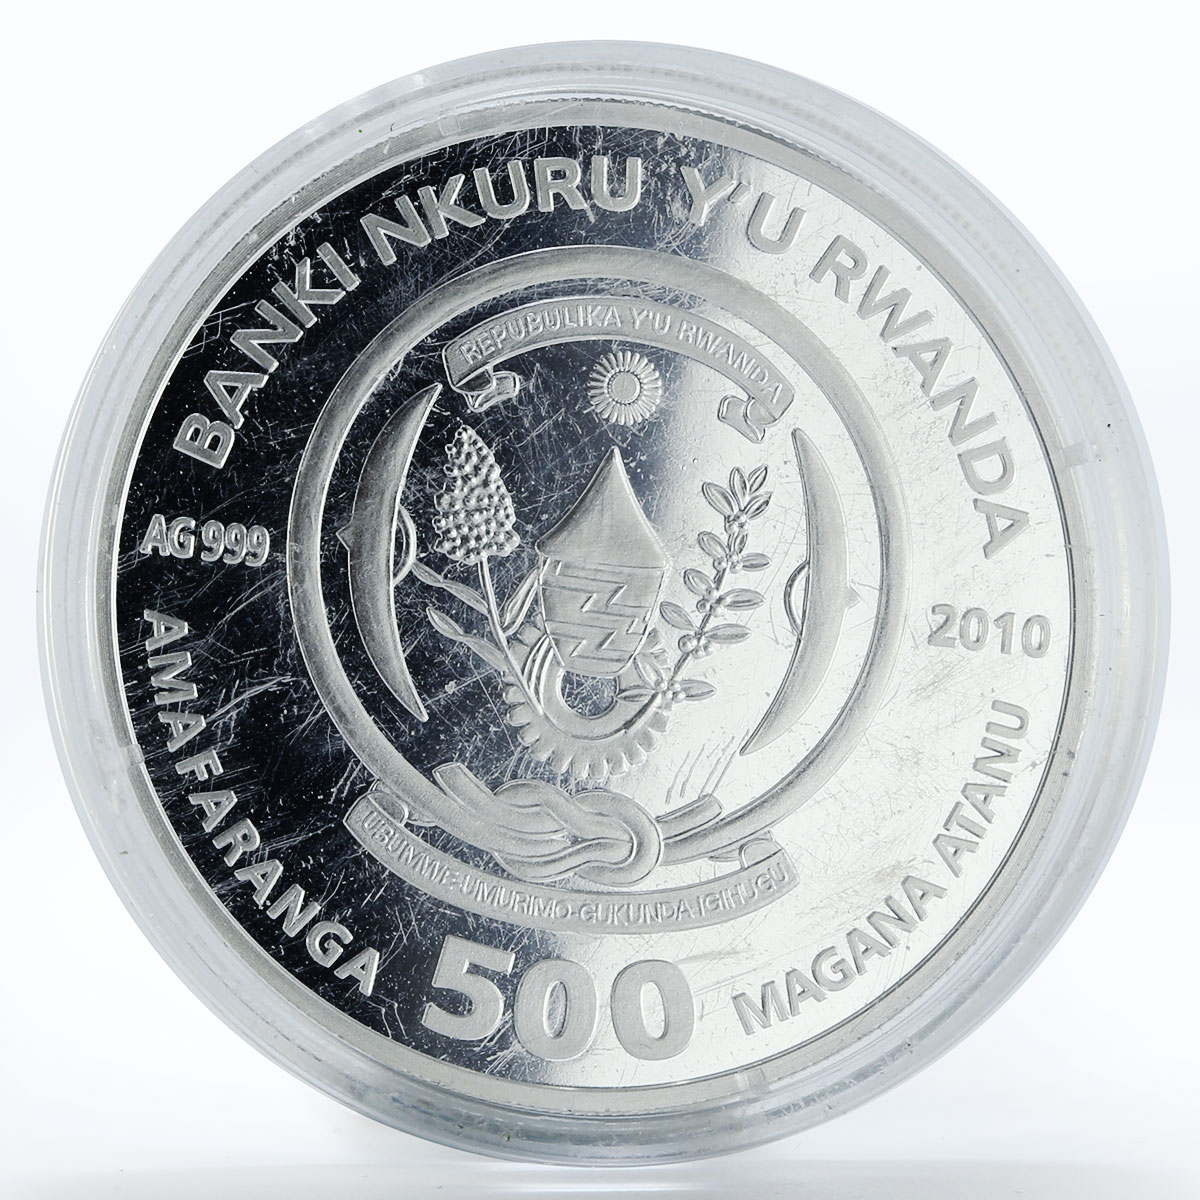 Rwanda 500 francs Chelonia Mydas turtle colored silver coin 2010